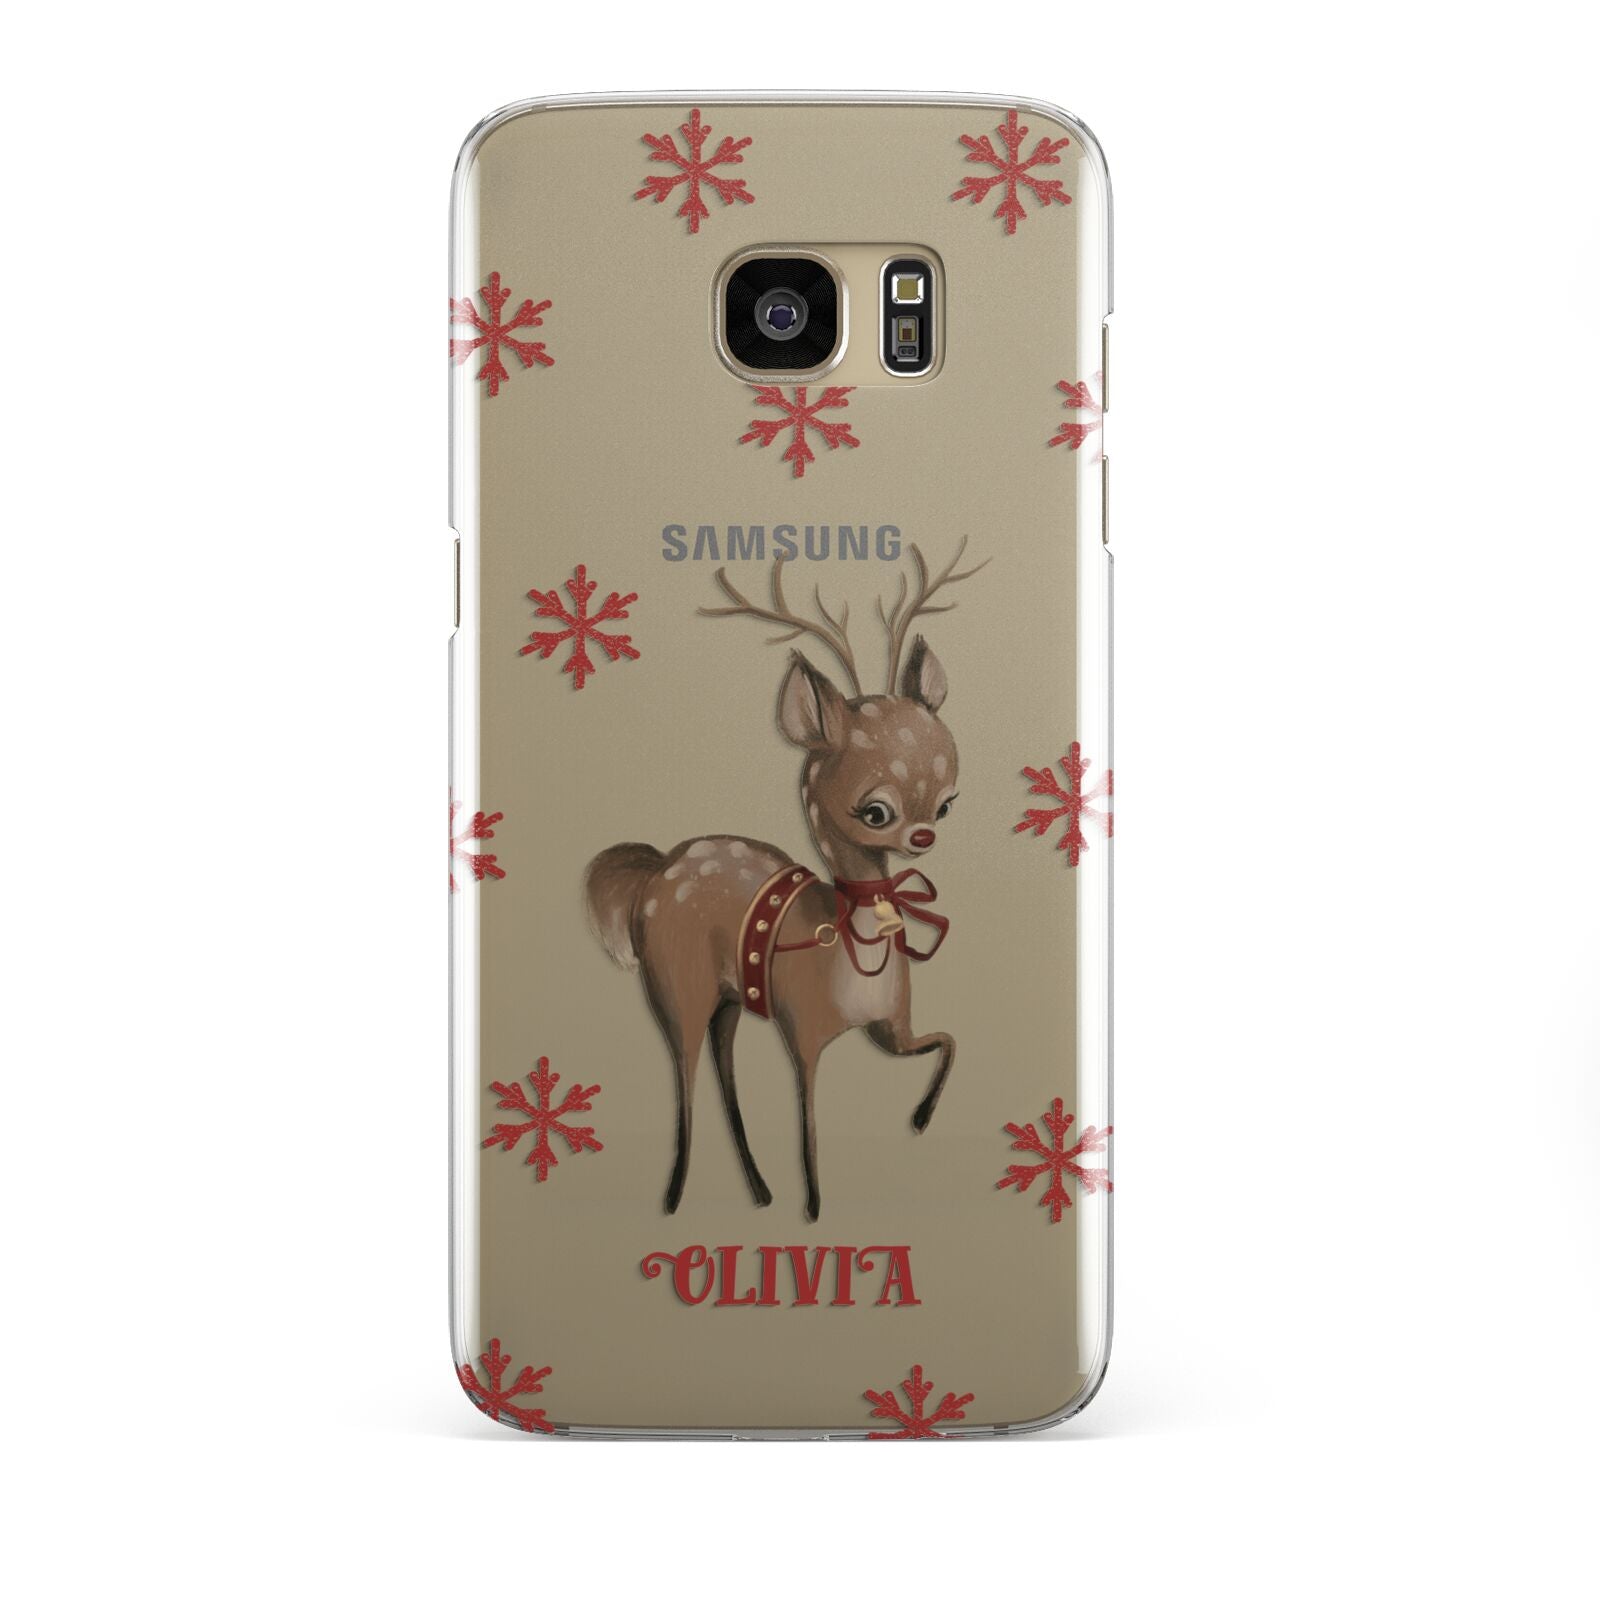 Rudolph Delivery Samsung Galaxy S7 Edge Case